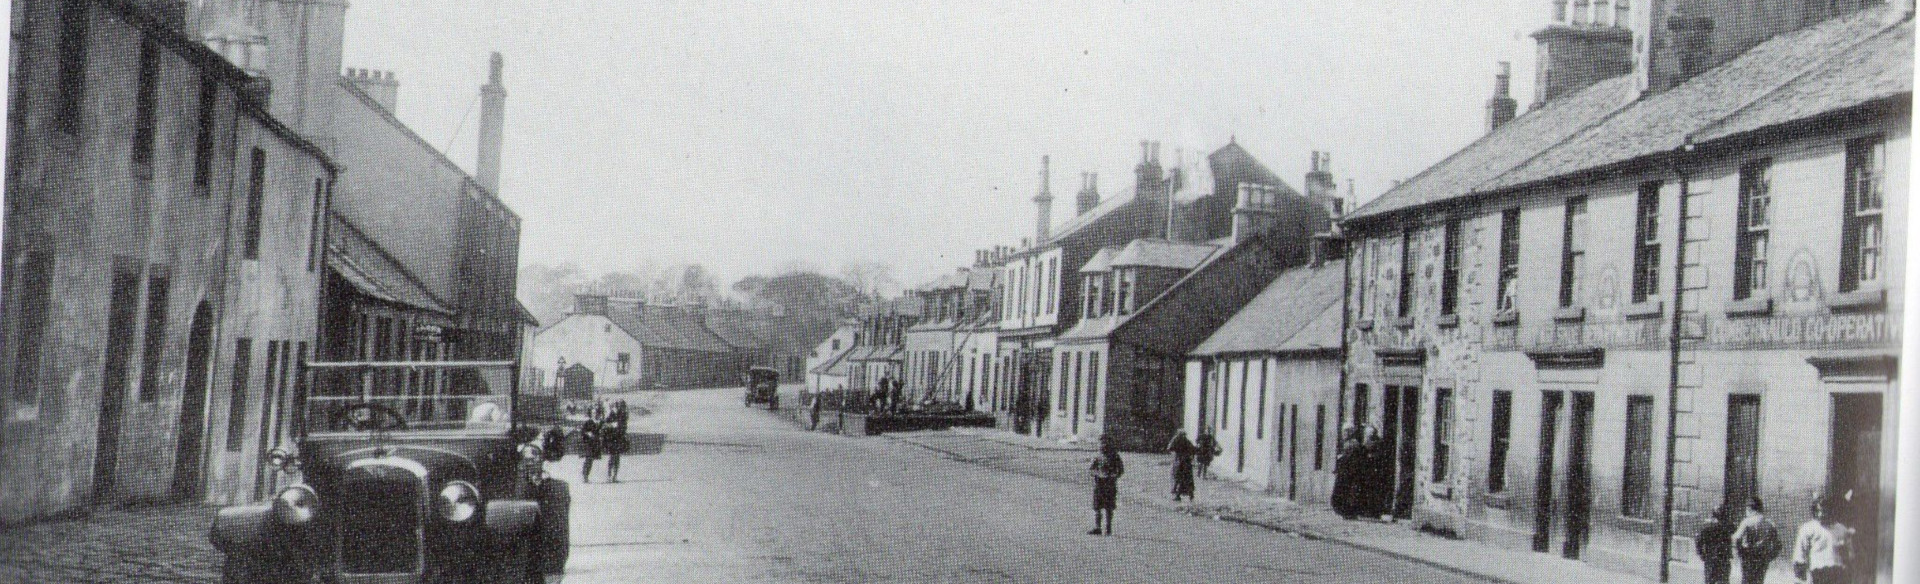 Cumbernauld history